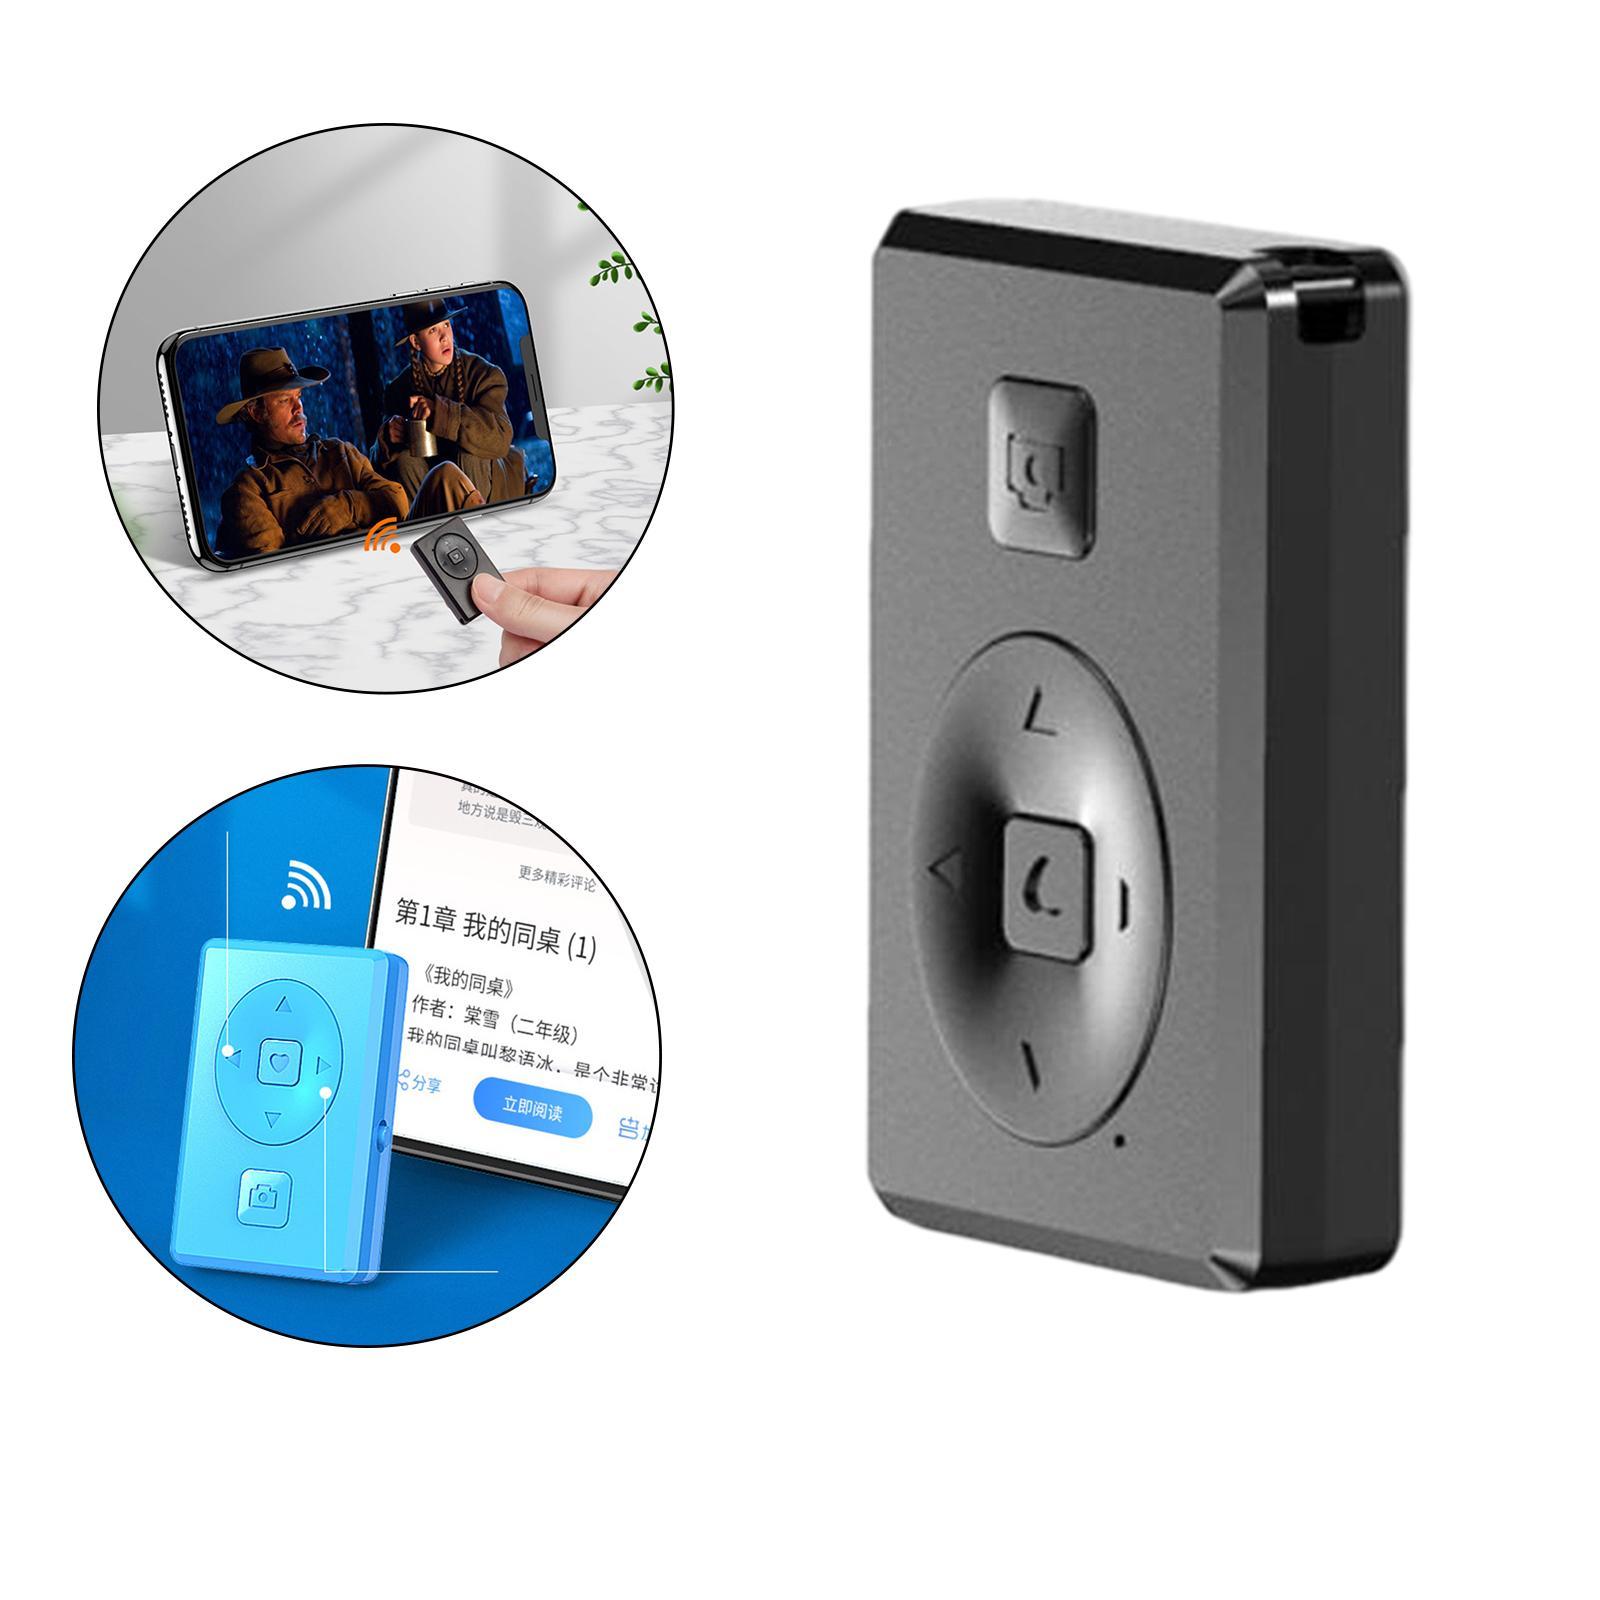 Wireless Bluetooth Camera Shutter Remote Control for Smartphones Black